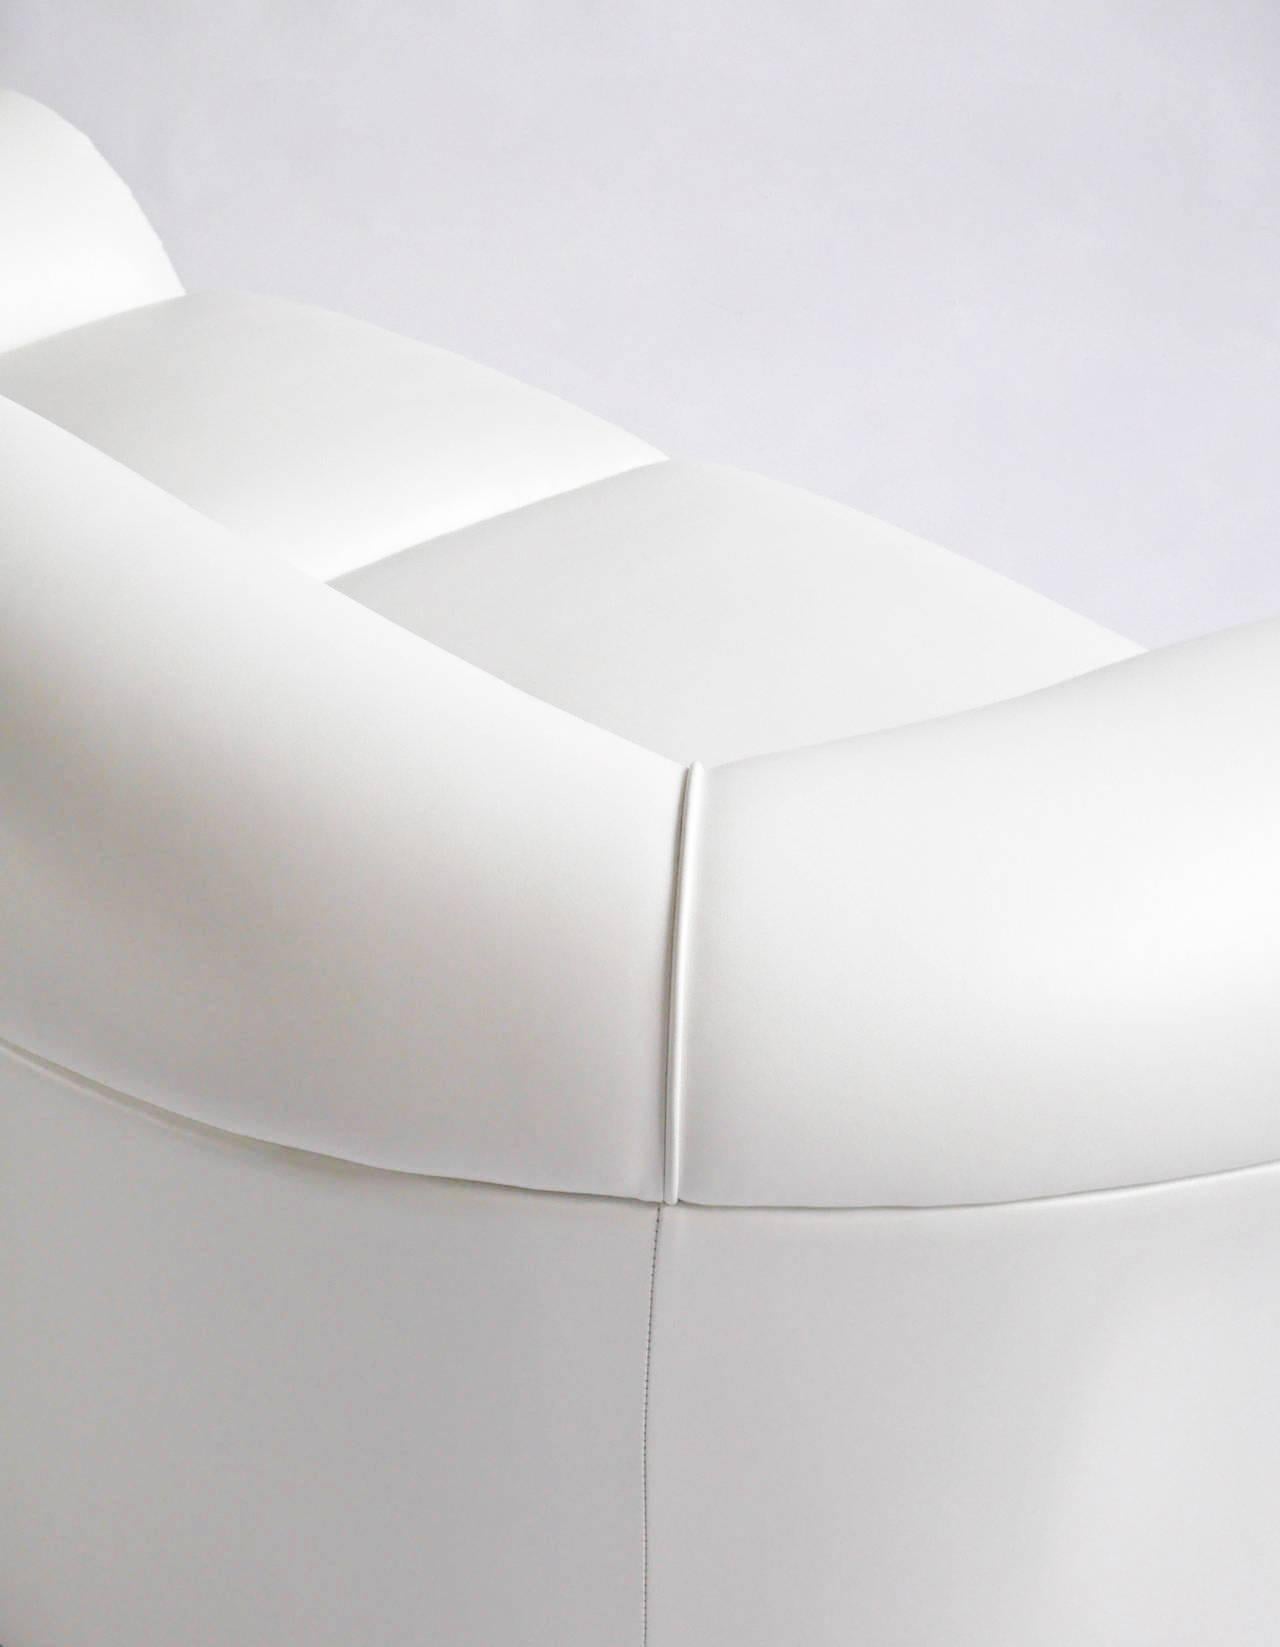 American Robert Venturi White Leather Sofa for Knoll